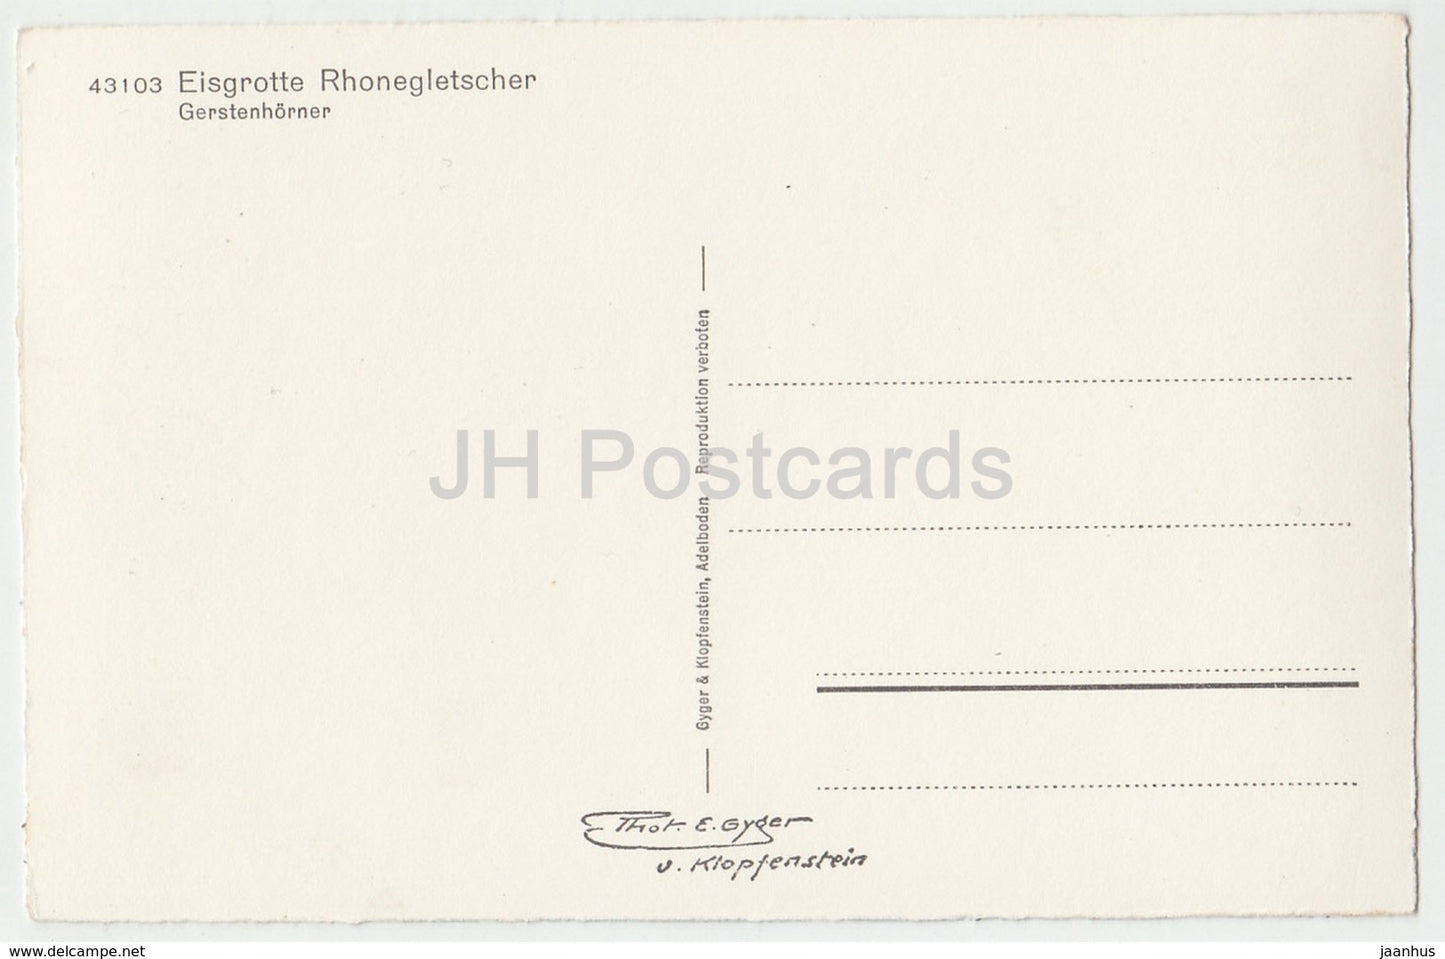 Eisgrotte Rhonegletscher - Gerstenhorner - 43103 - Suisse - carte postale ancienne - inutilisée